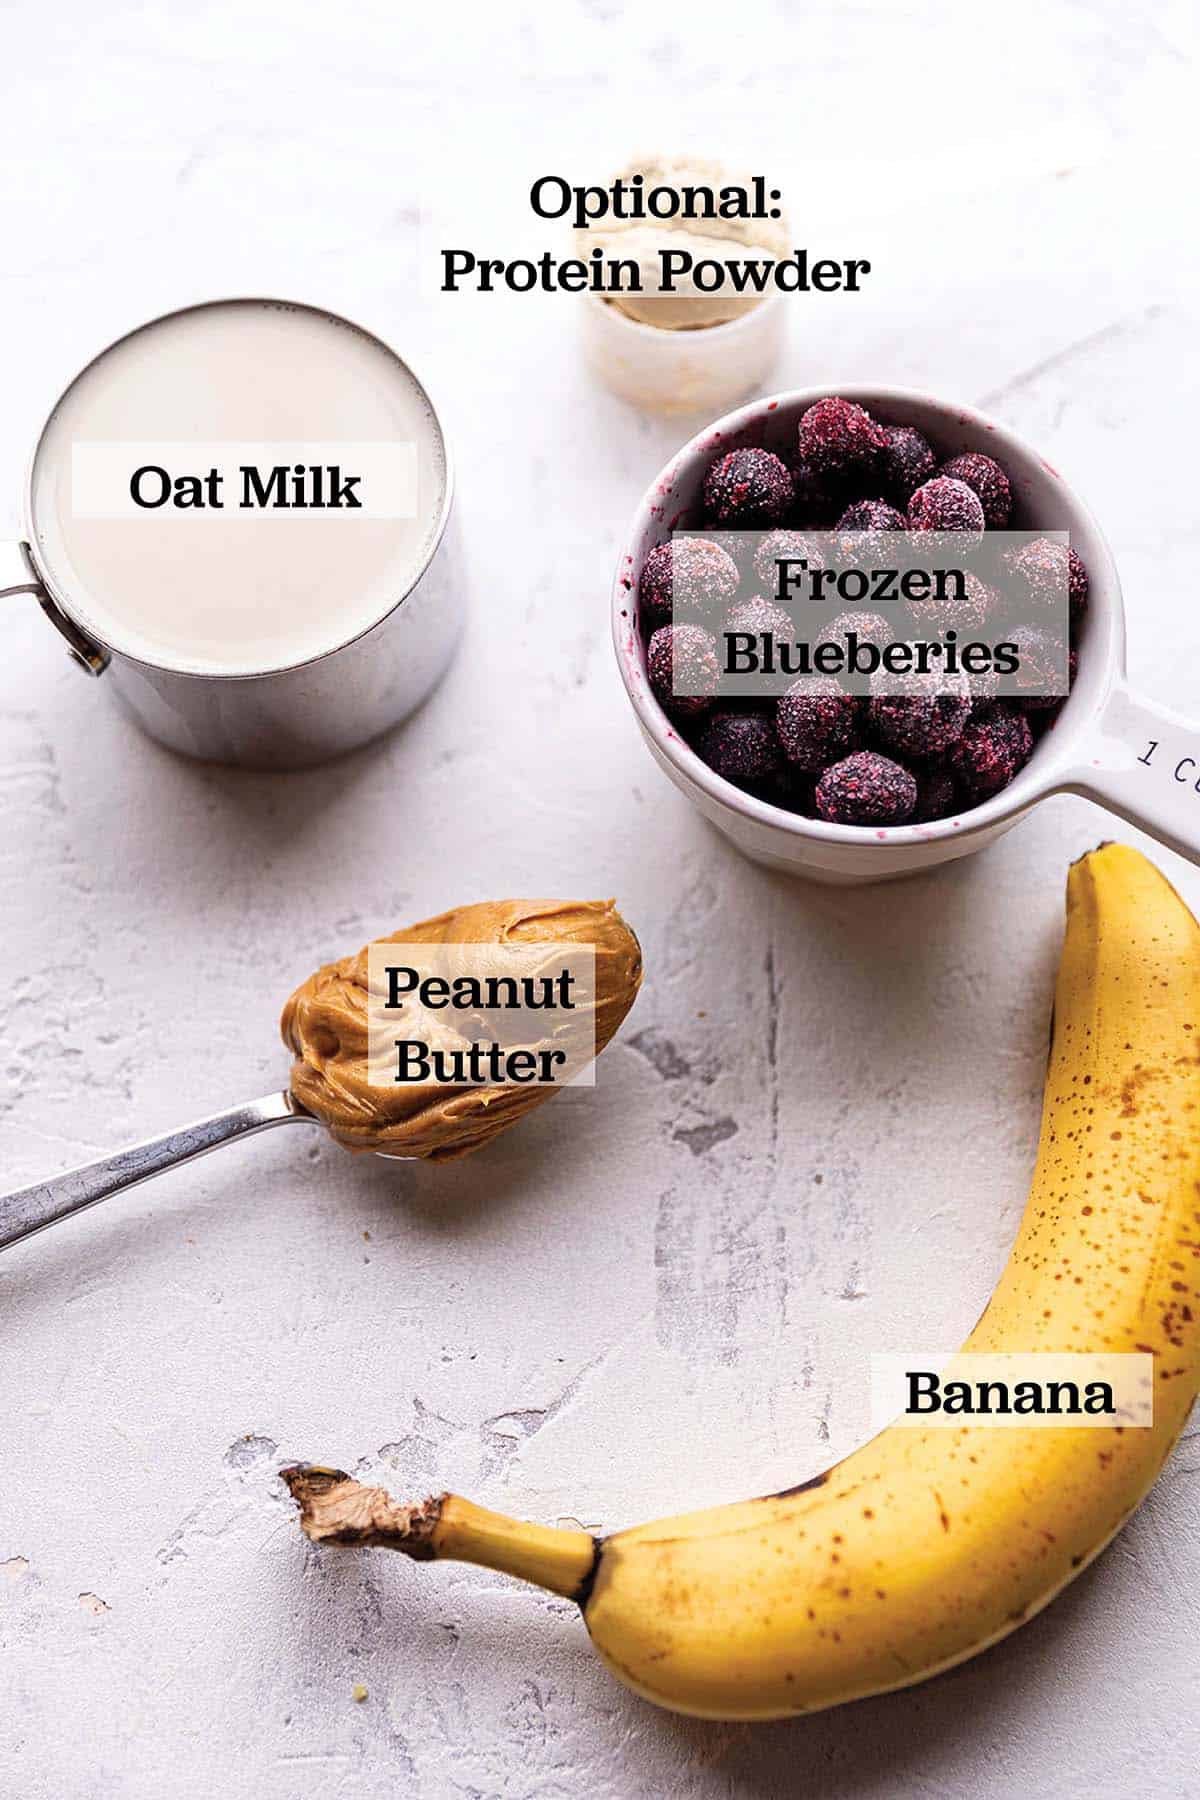 Banana, frozen blueberries, peanut butter, oat milk and protein powder.